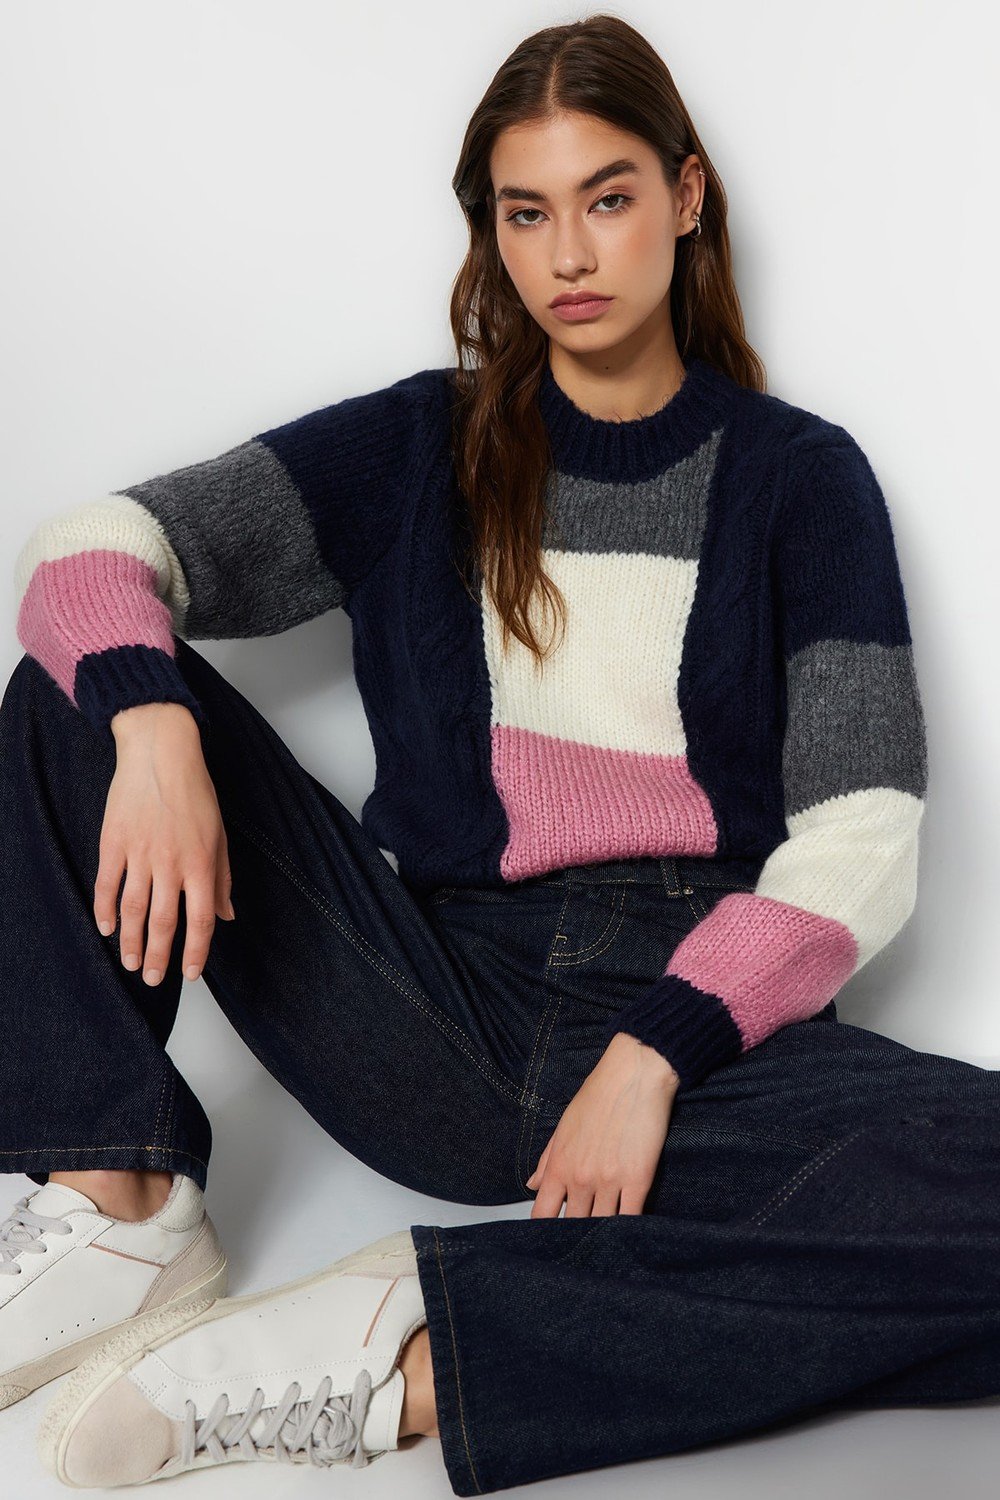 Trendyol Sweater - Dark blue - Regular fit